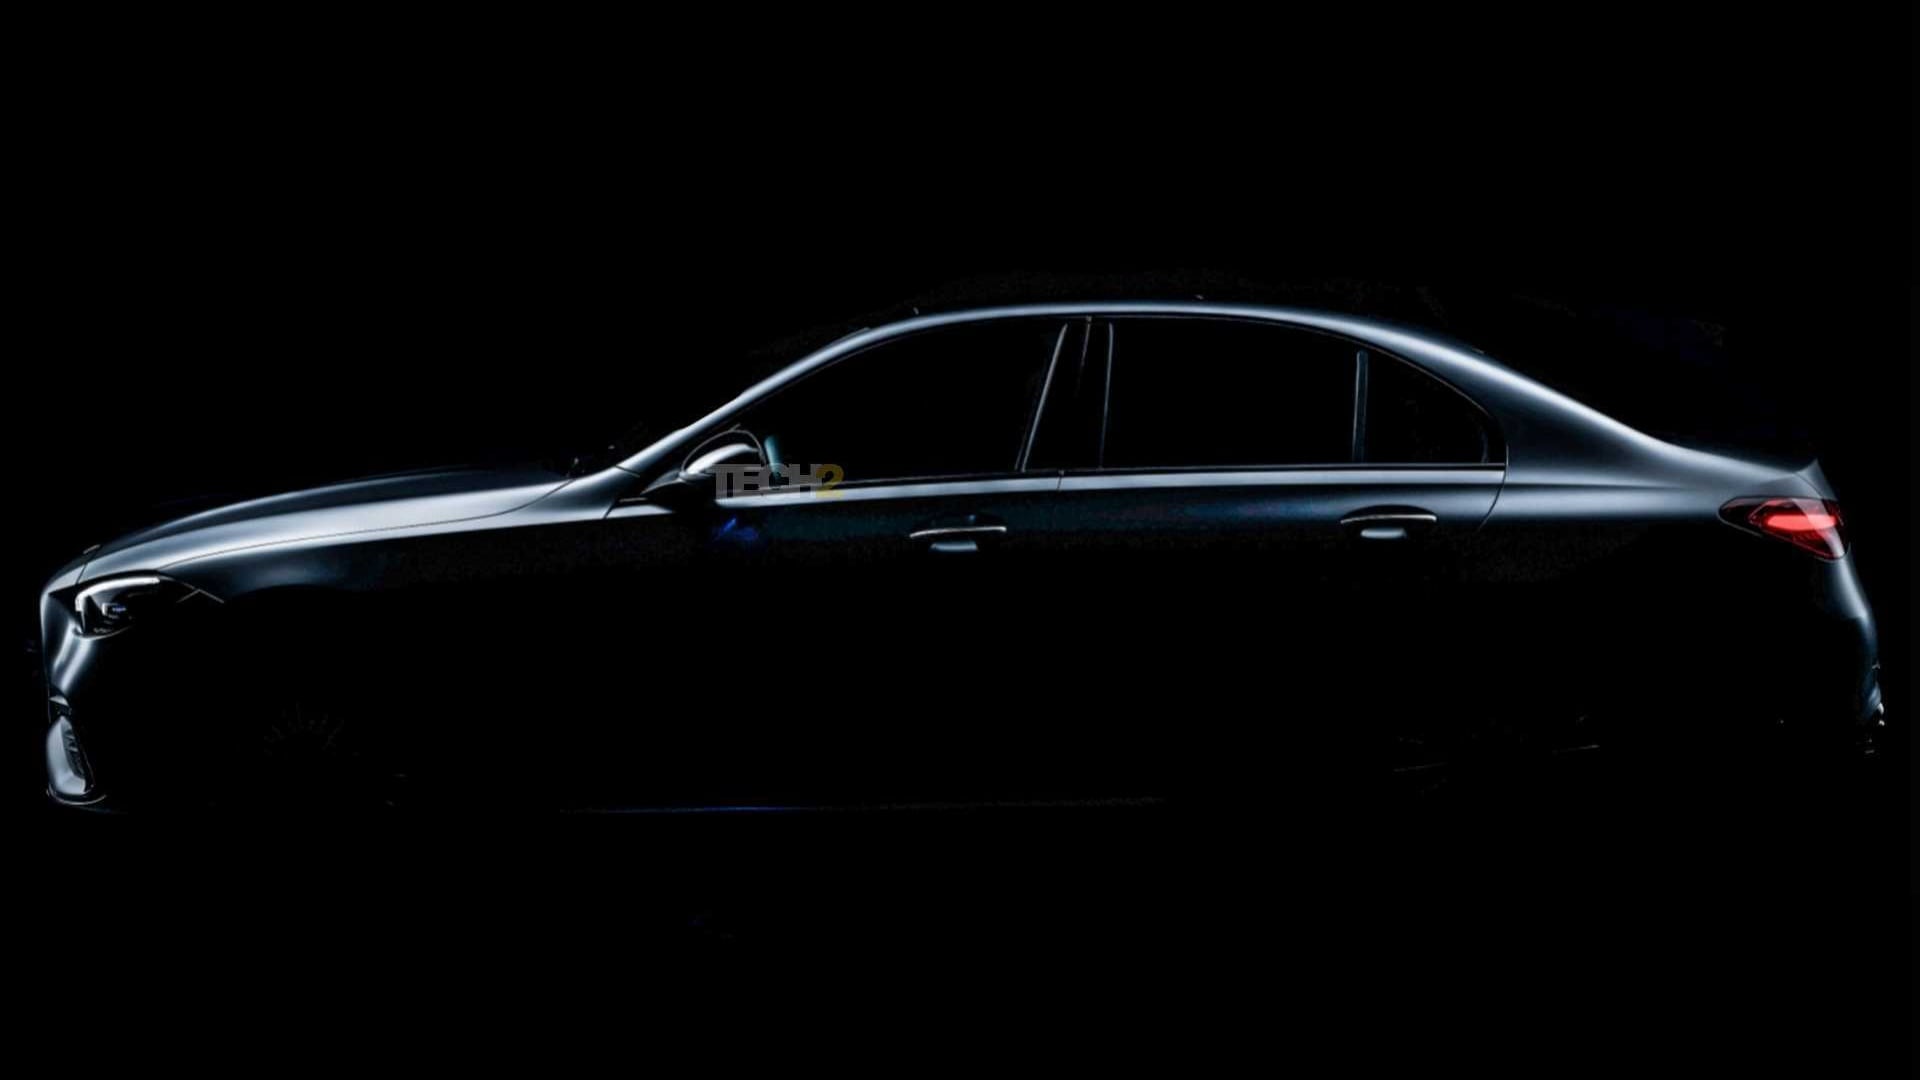 The new Mercedes-Benz C-Class will be 65mm longer than its predecessor. Image: Mercedes-Benz